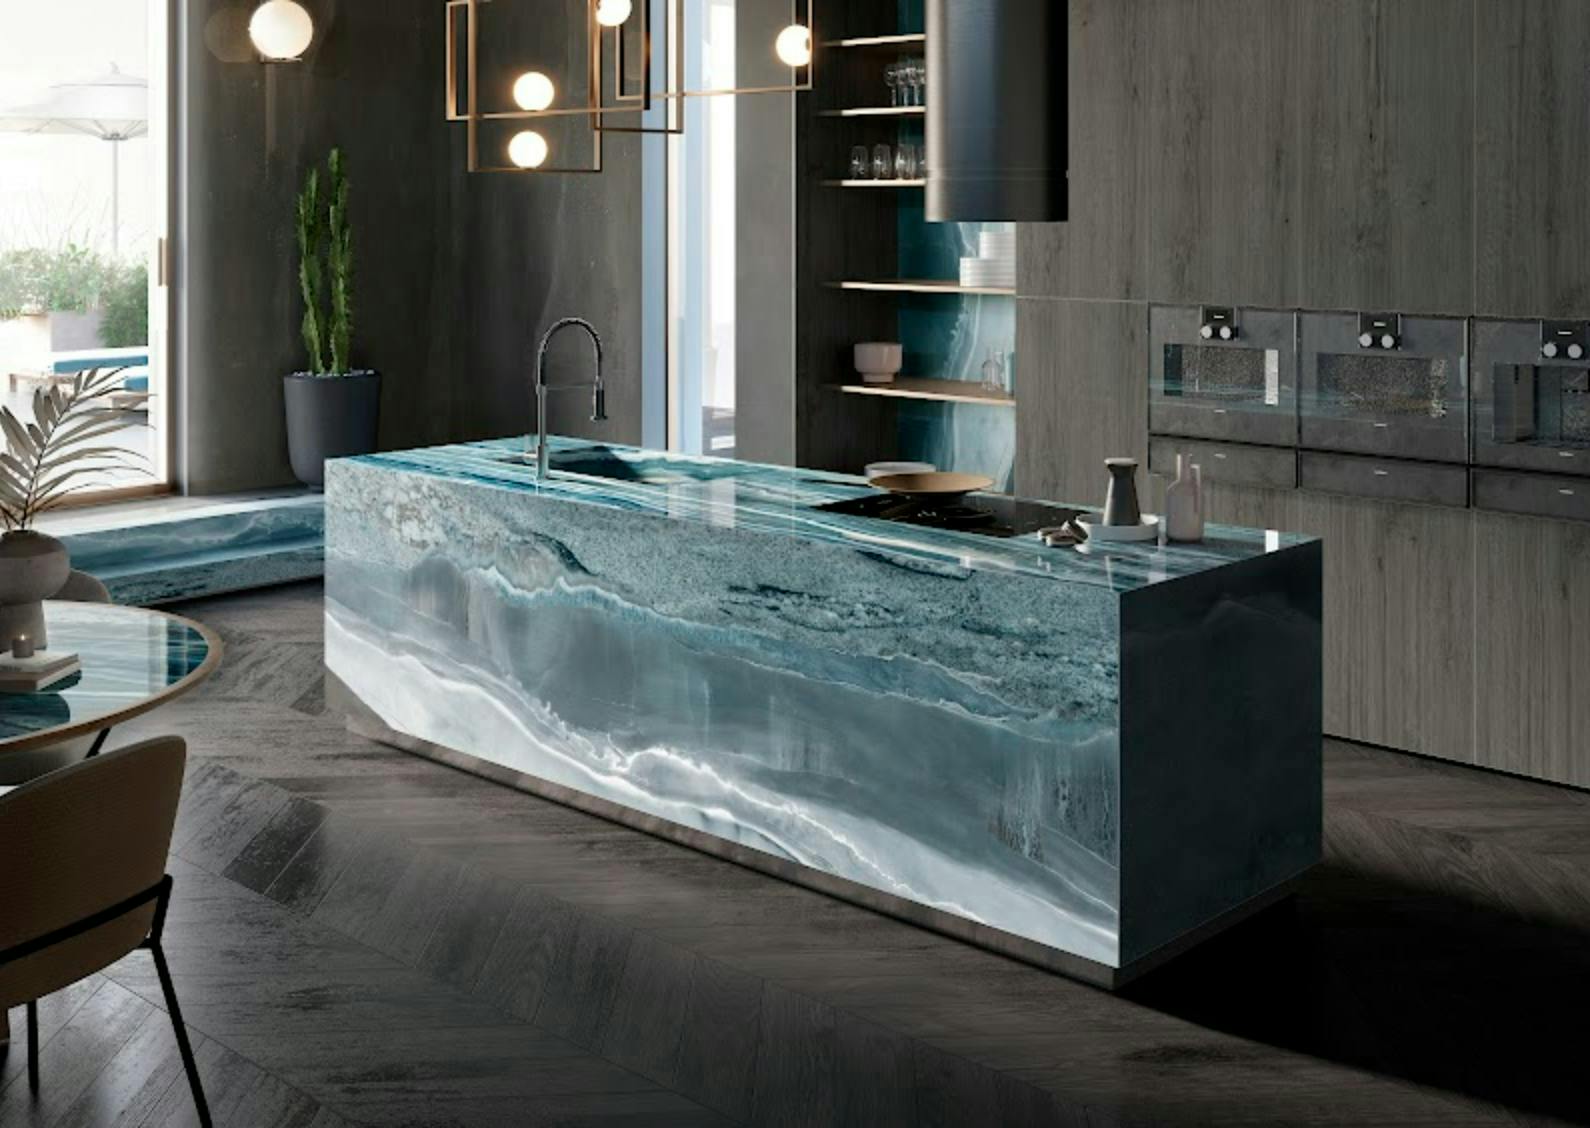 tub bathing indoors interior design bathtub person chair furniture floor